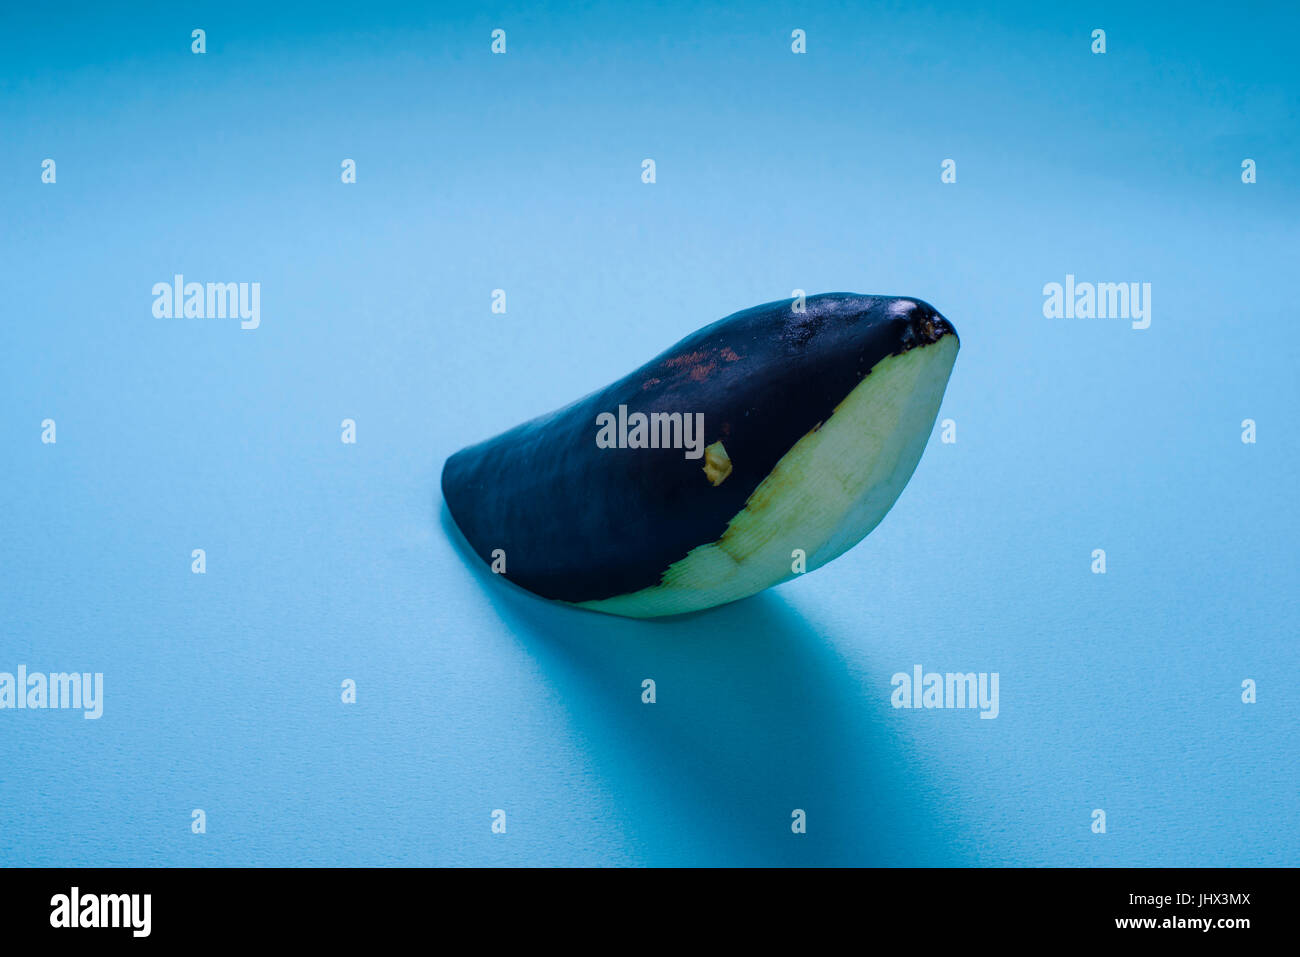 Whale-shaped eggplant Stock Photo